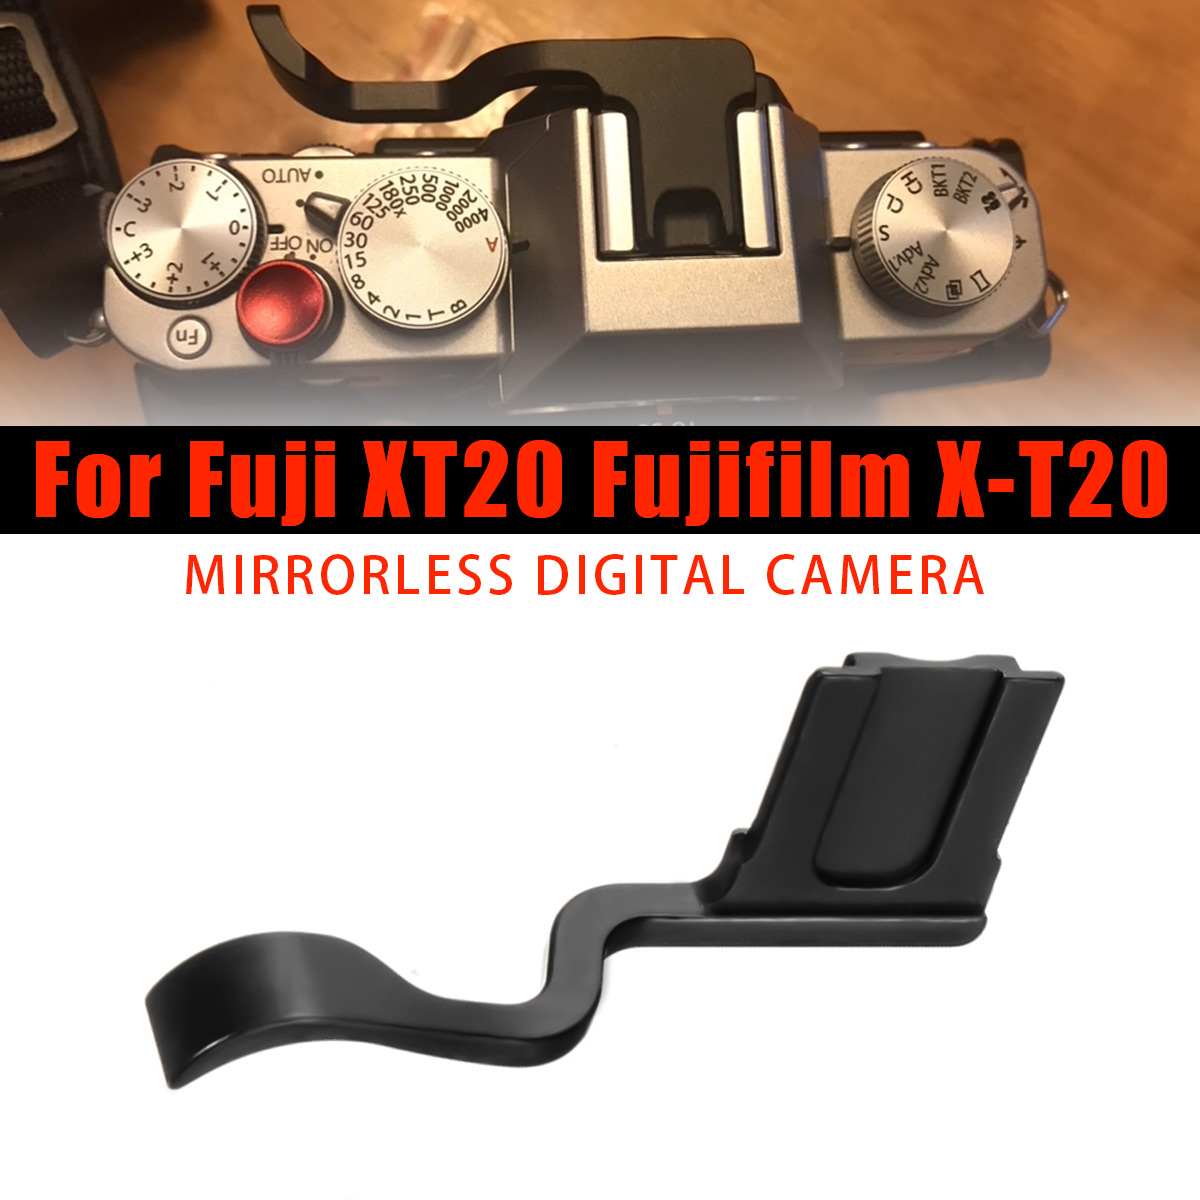 Durable-Thumb-Rest-Grip-Replacement-Accessories-For-Fuji-Fujifilm-XT20-Mirrorless-Digital-Camera-1348785-1